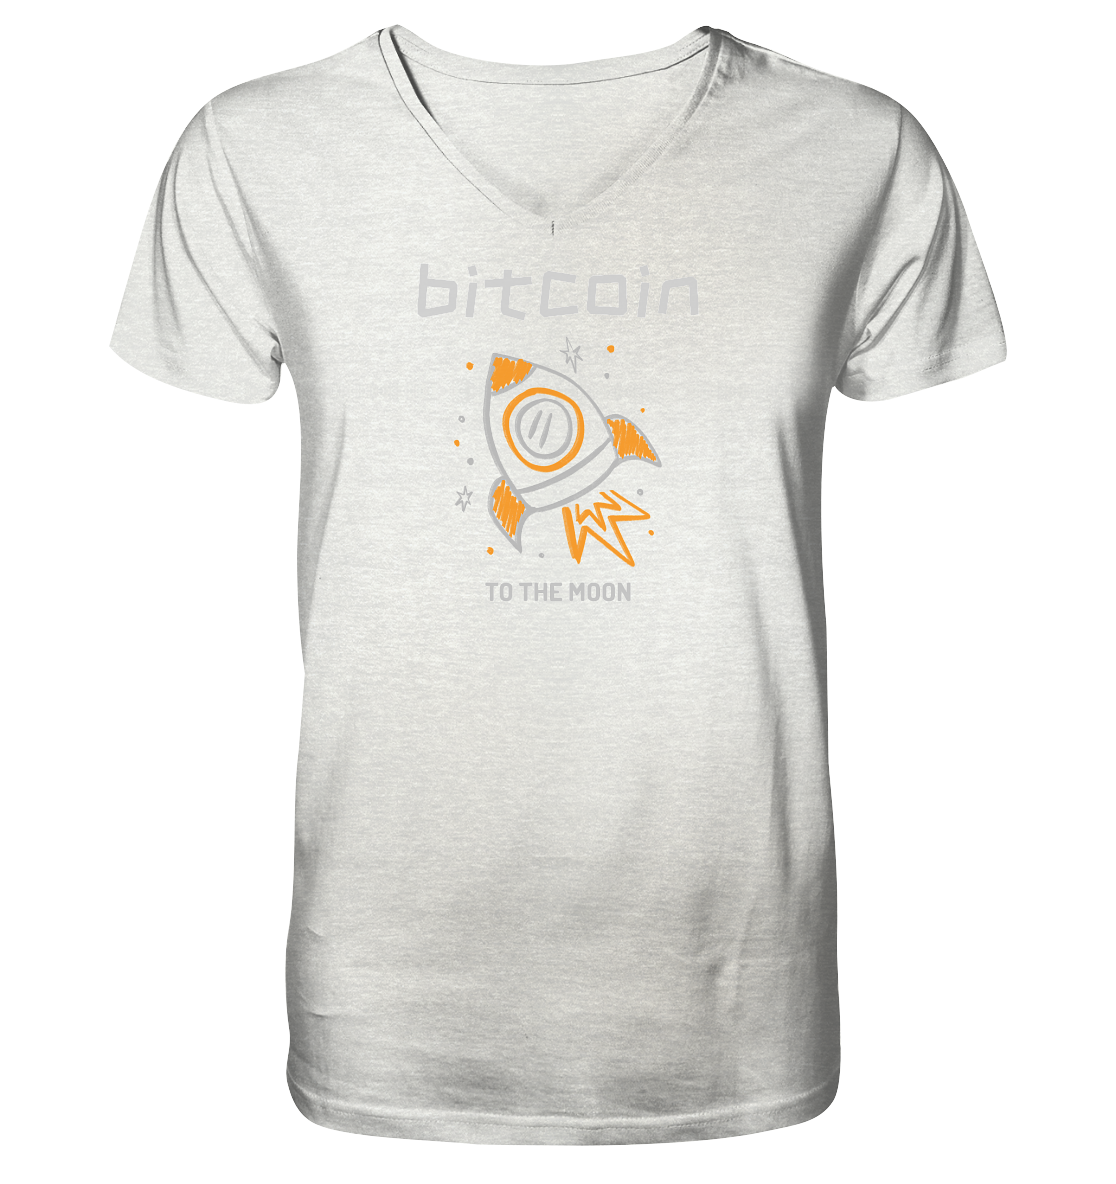 Bitcoin to the moon - Mens Organic V-Neck Shirt